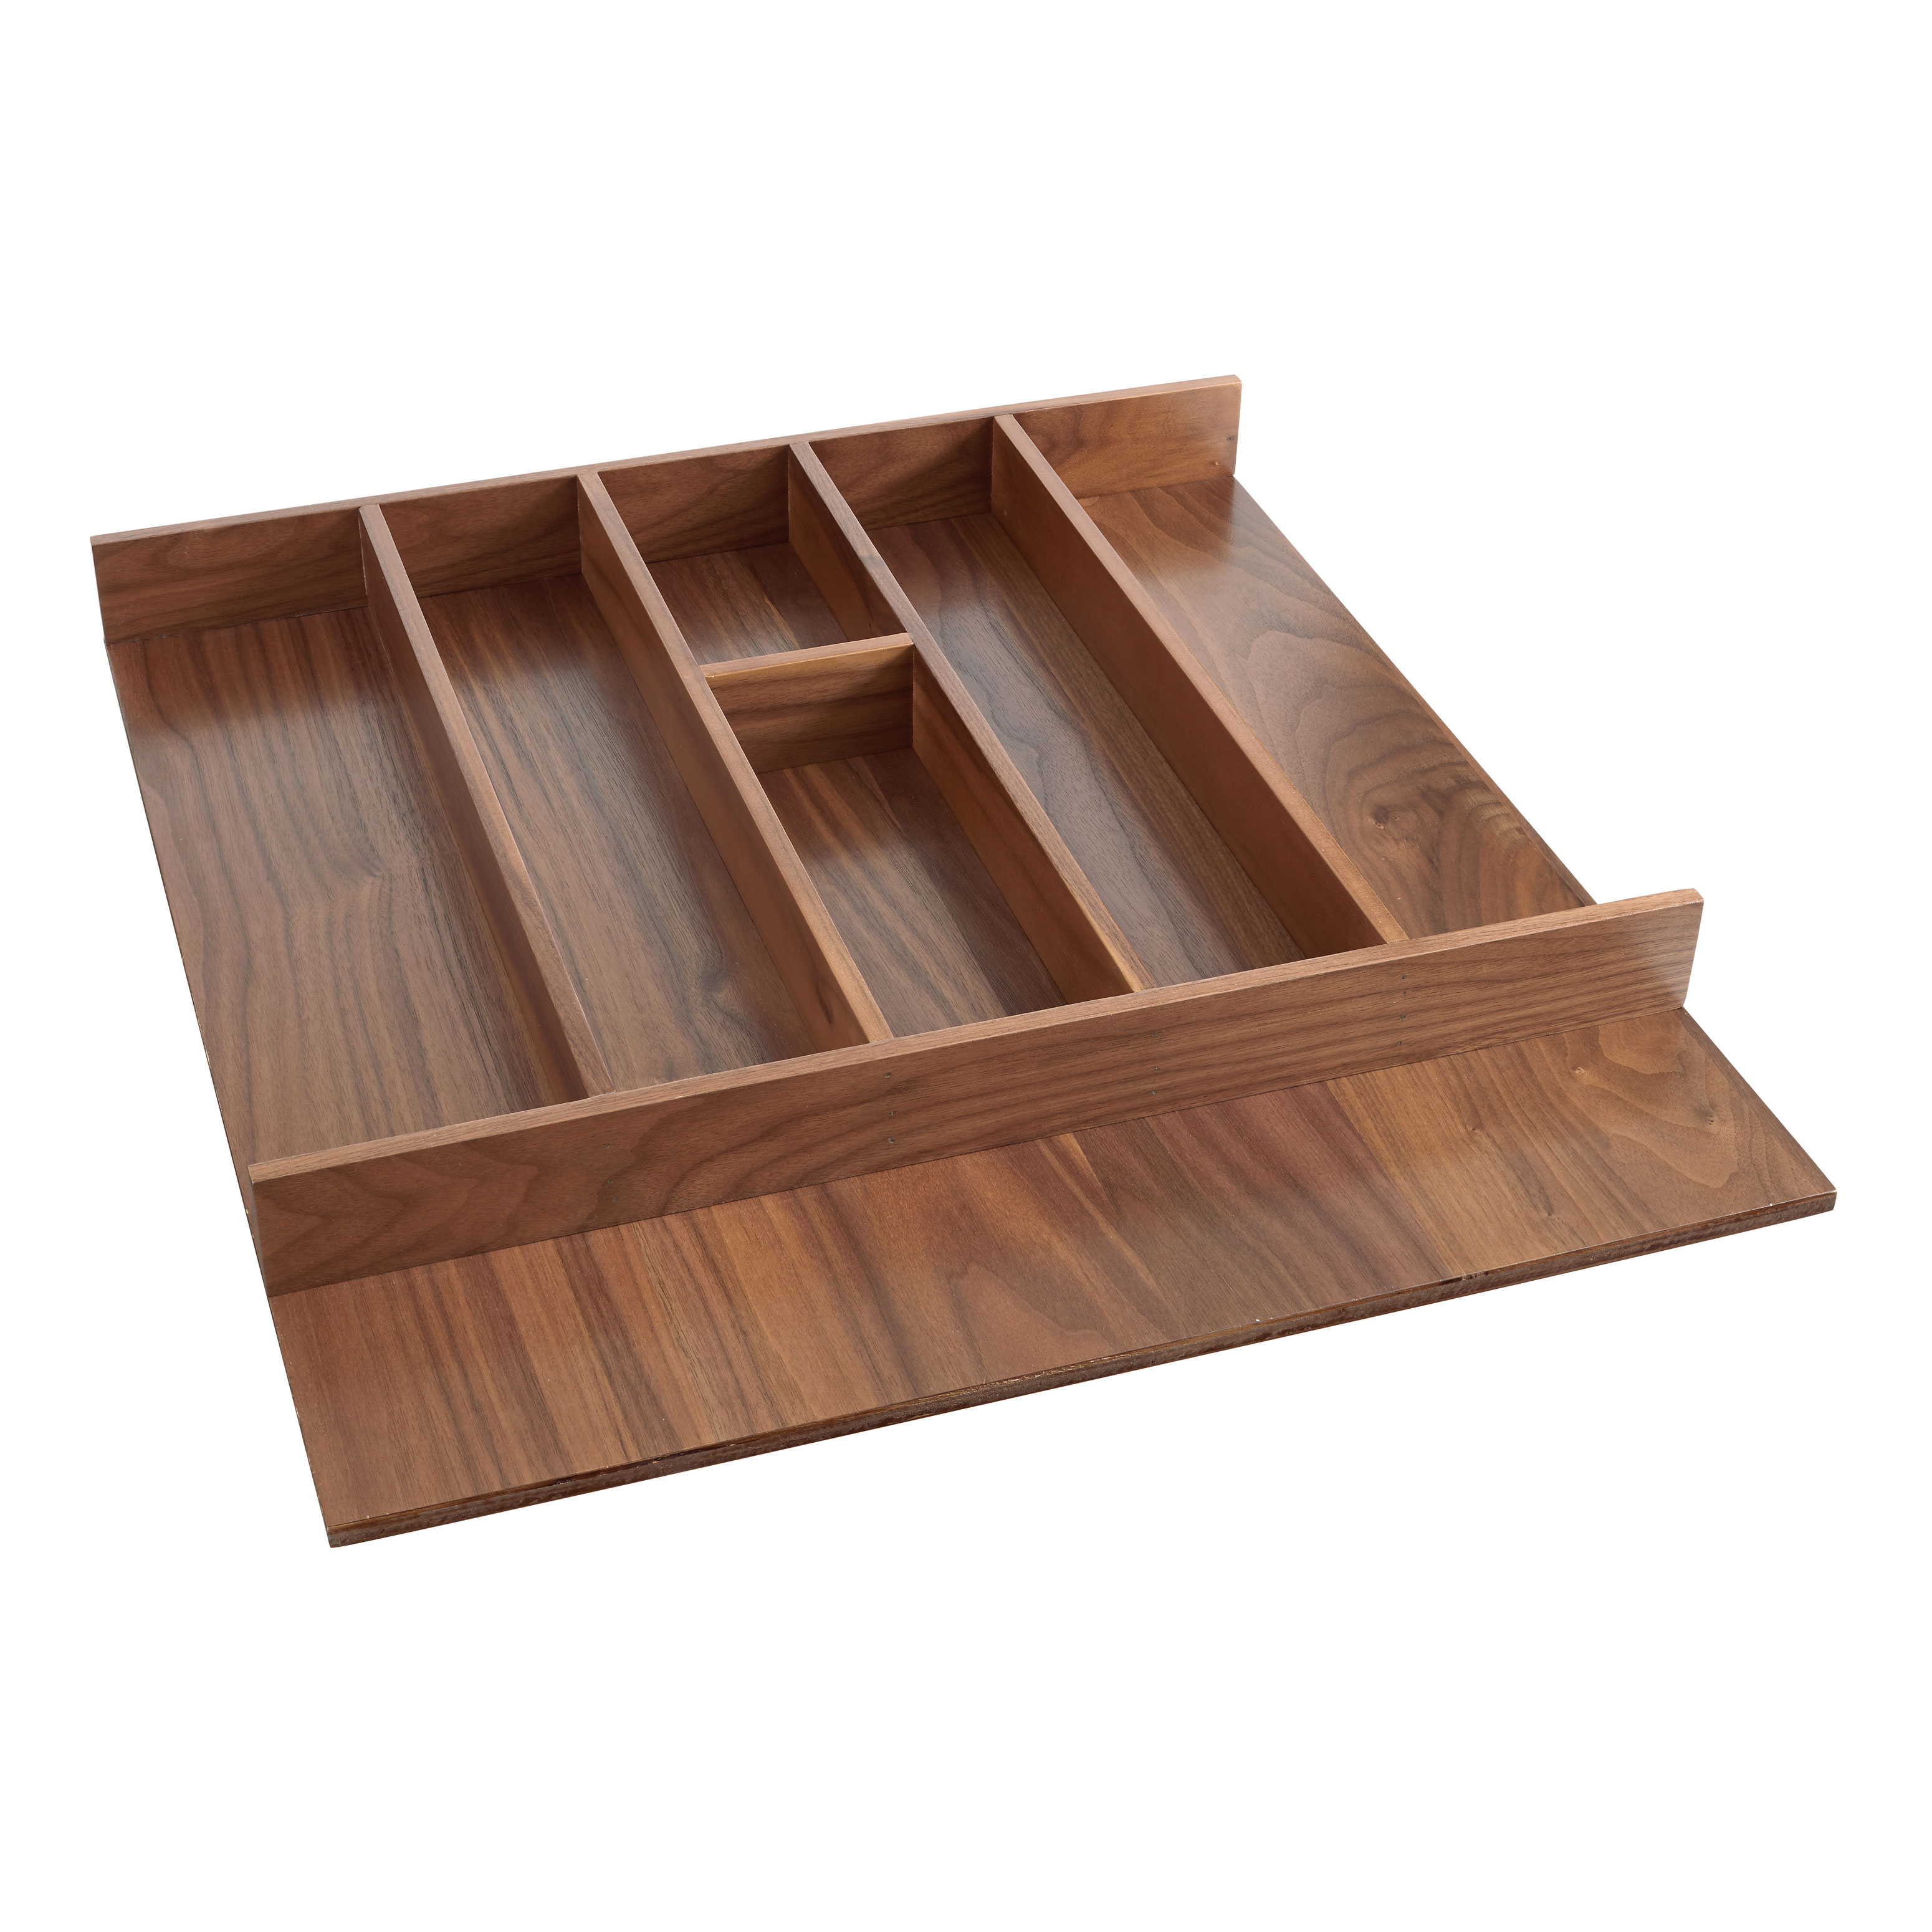 Wood Utensil Drawer Insert 21-1/8"  W Walnut, Rev-A-Shelf  4WUT-WN-3SH